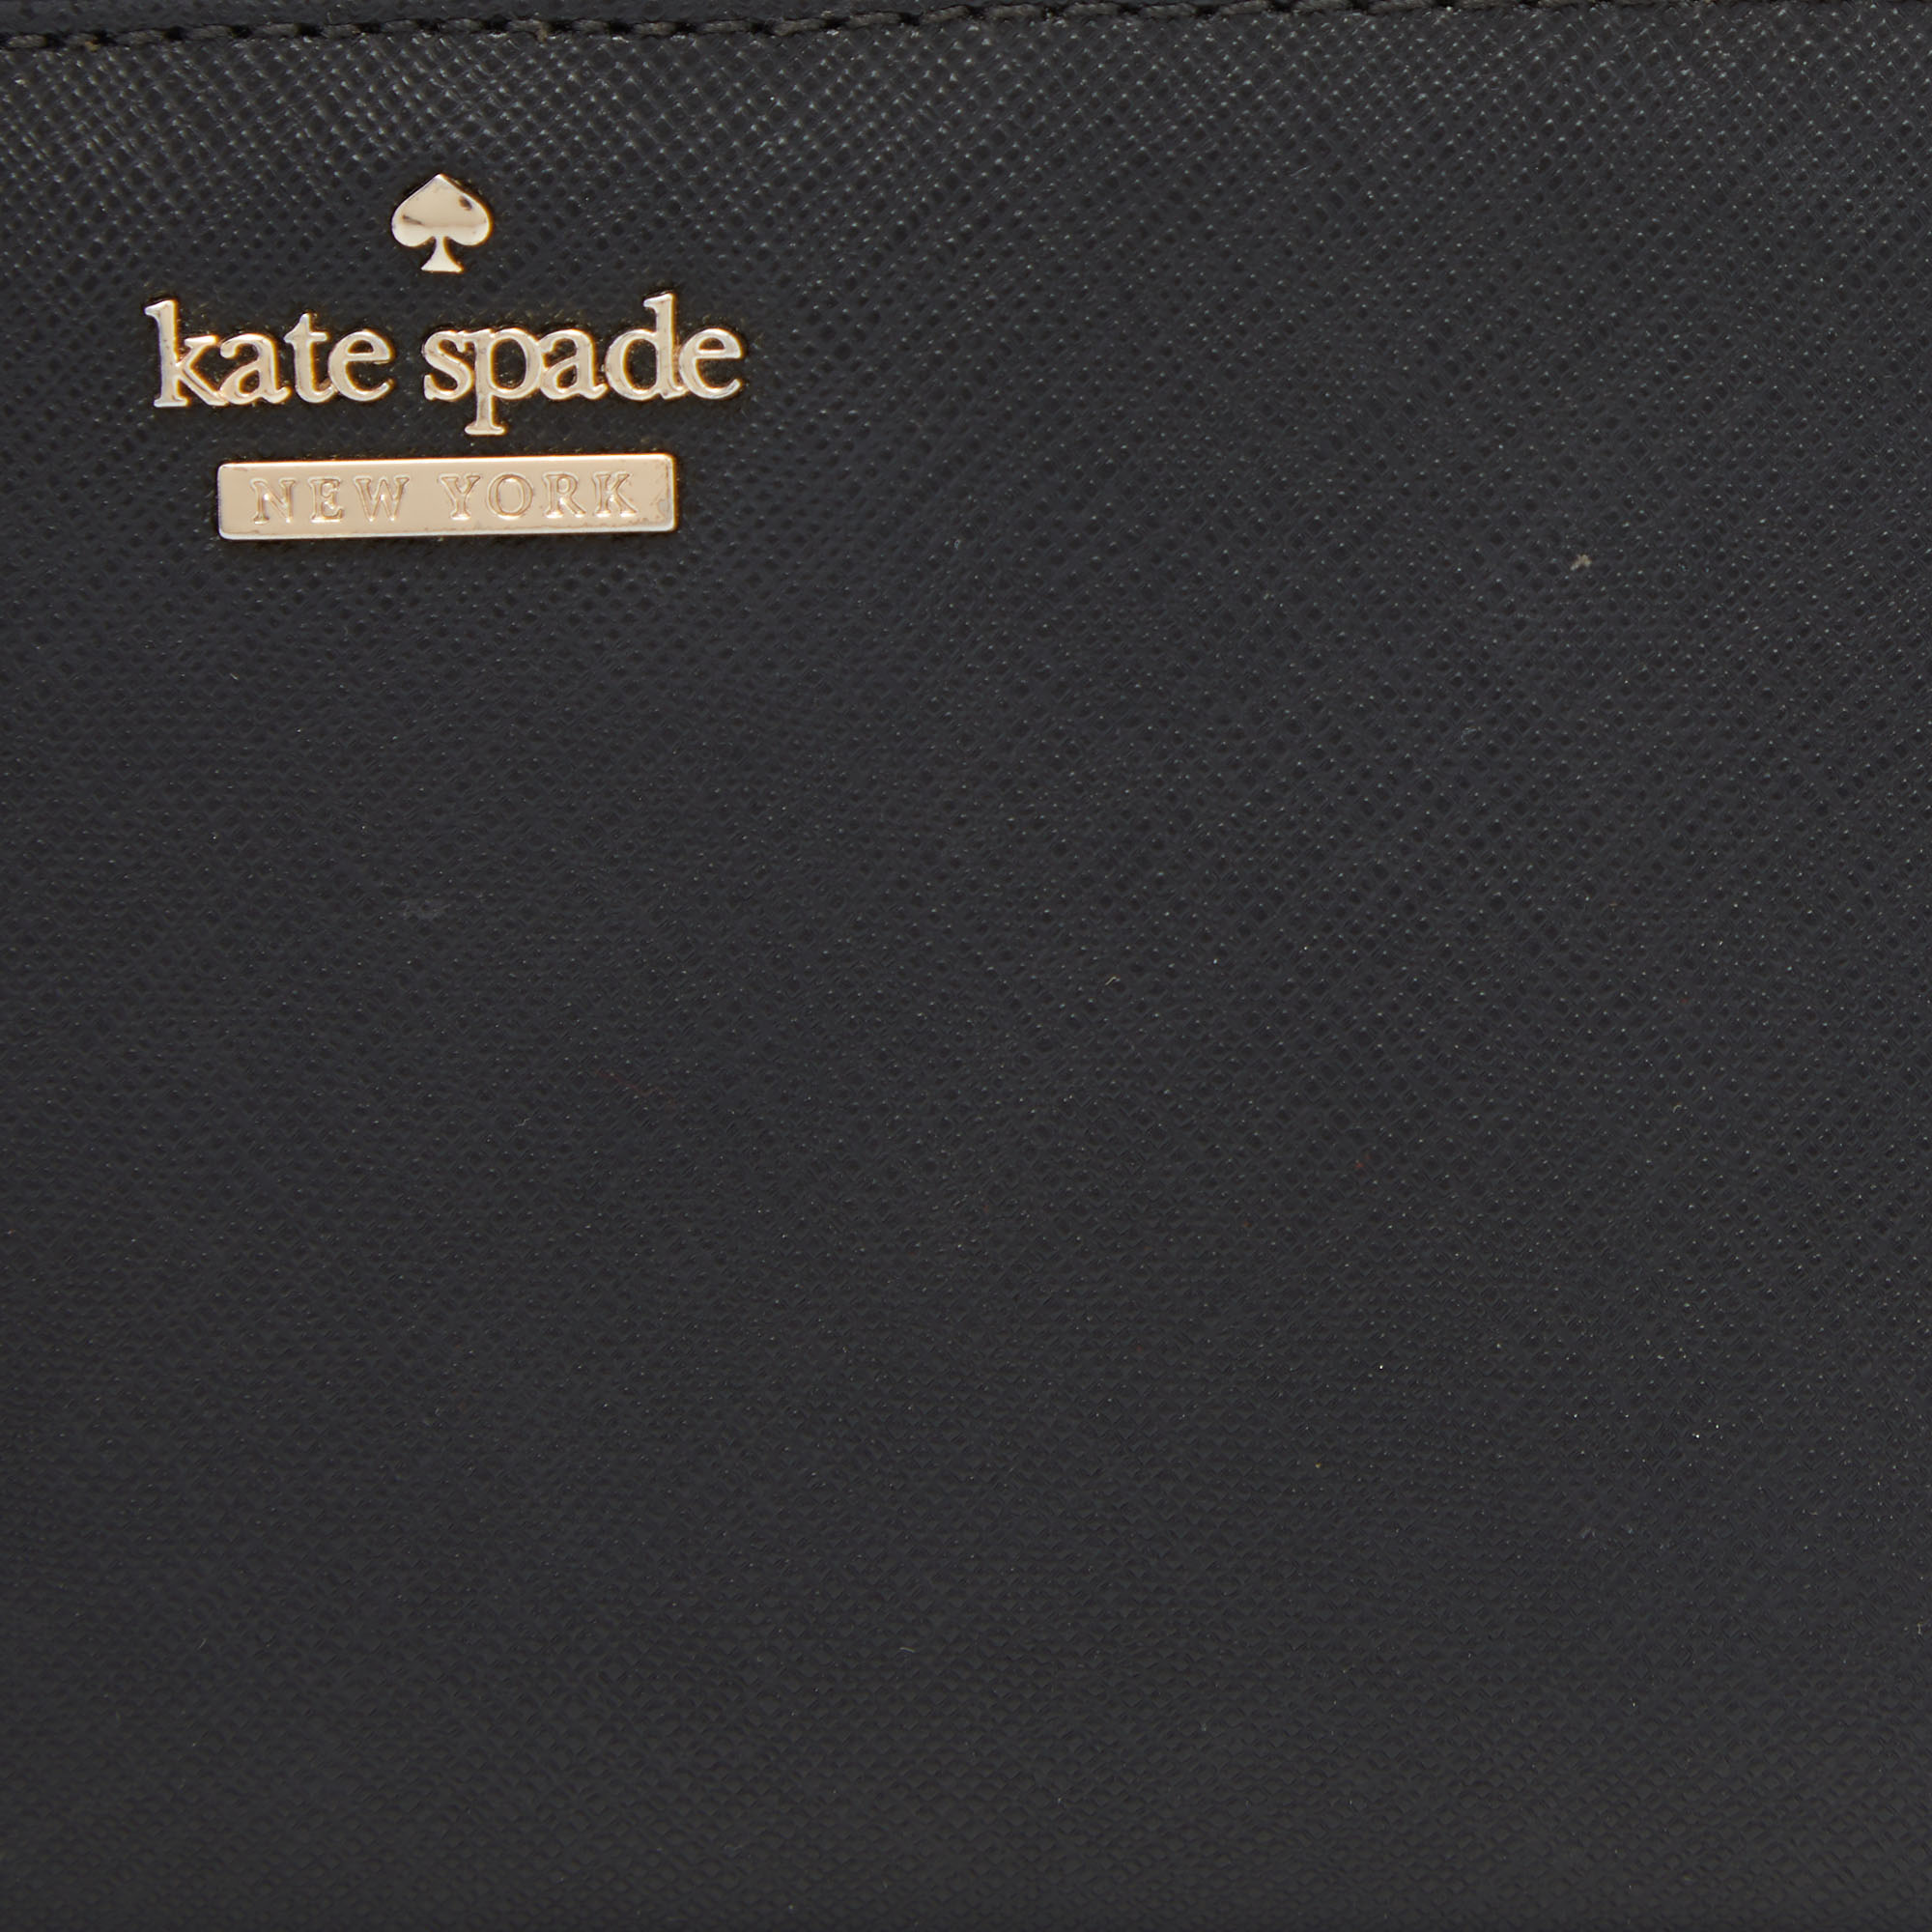 Kate Spade Black Leather Bifold Flap Wallet